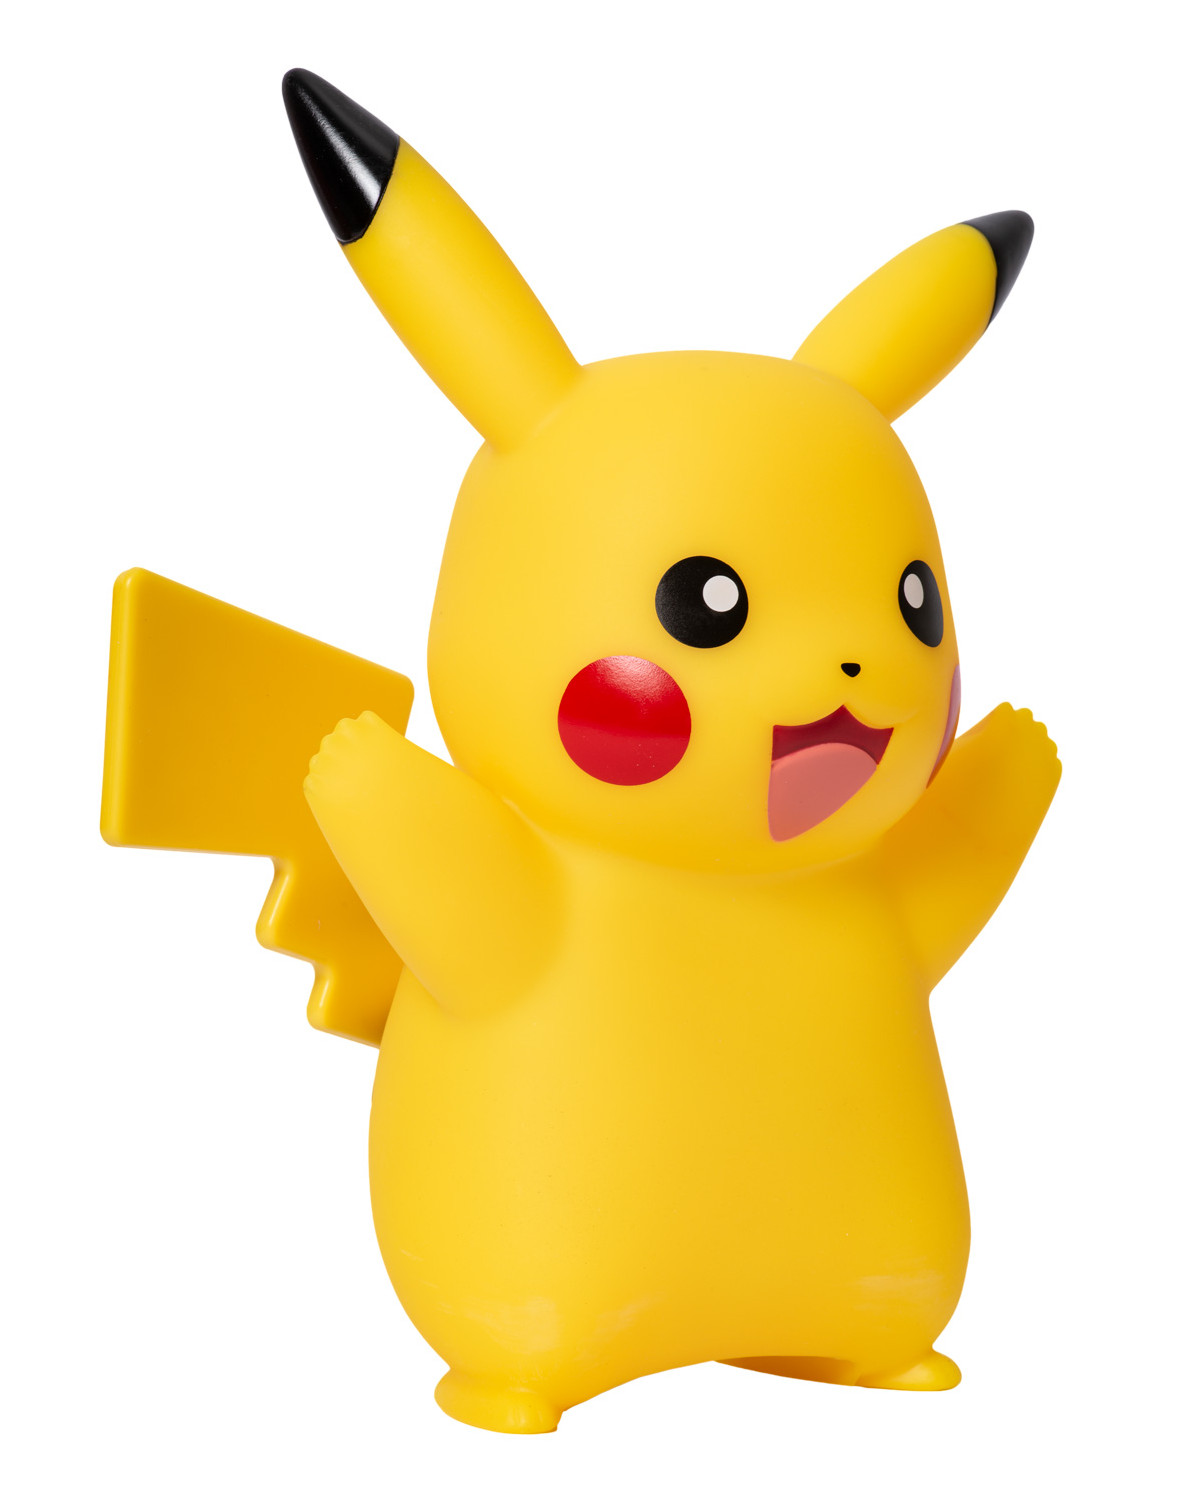 Pokémon - LED Lampe - cm 25 Pikachu